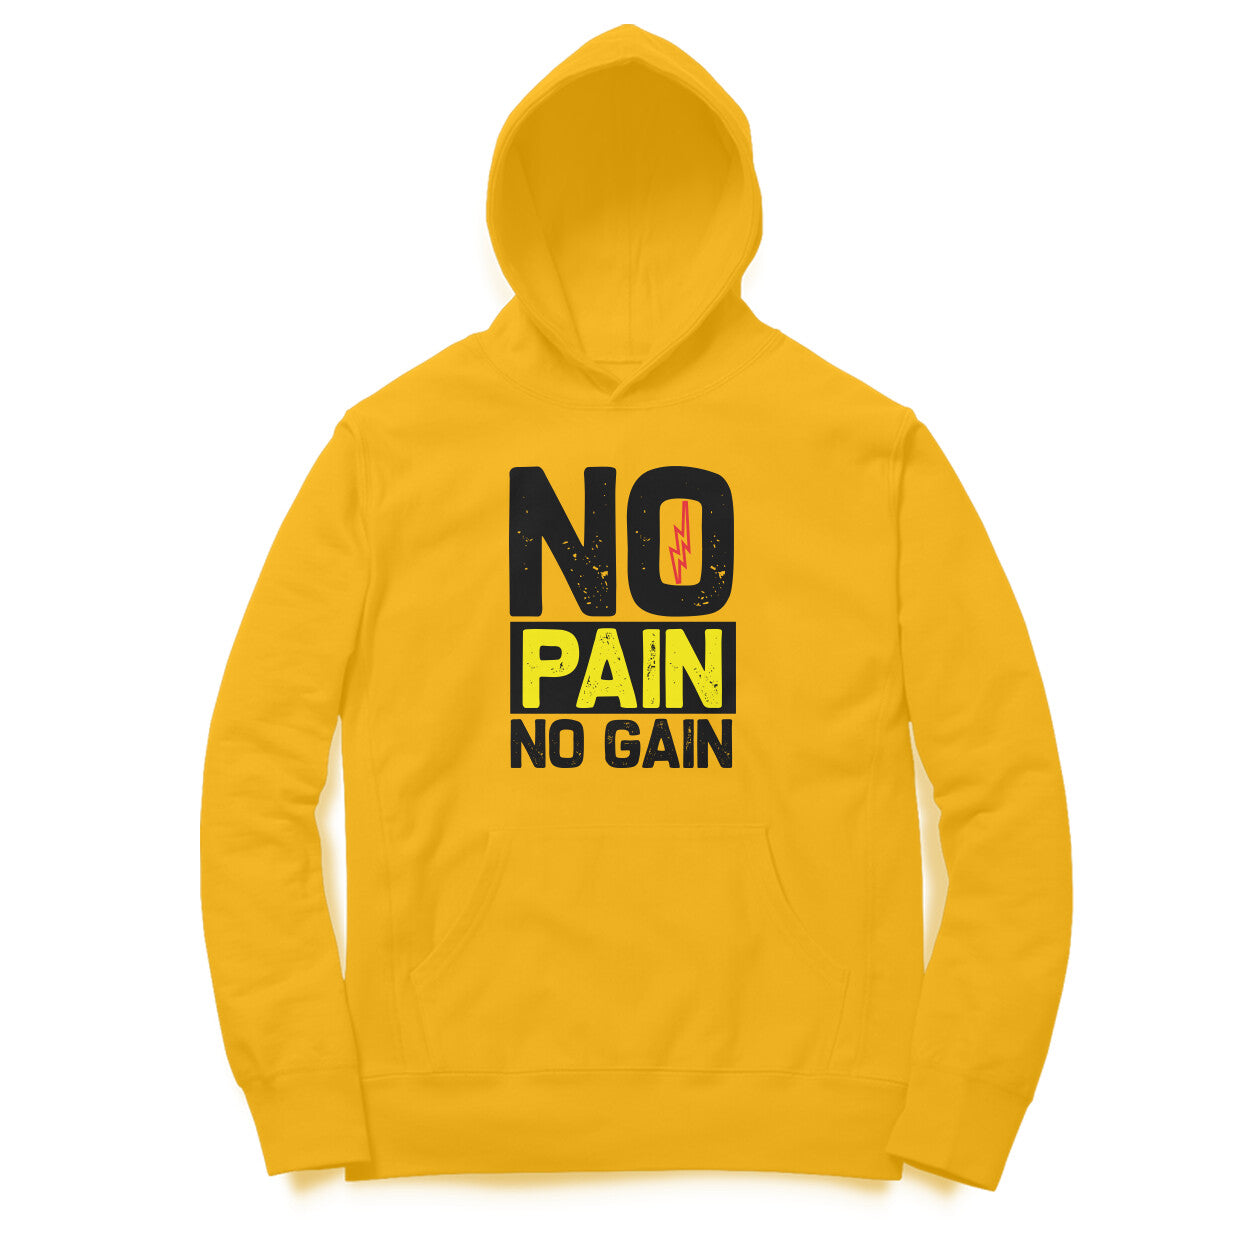 TNH - Unisex Hoodies - No Pain No gain